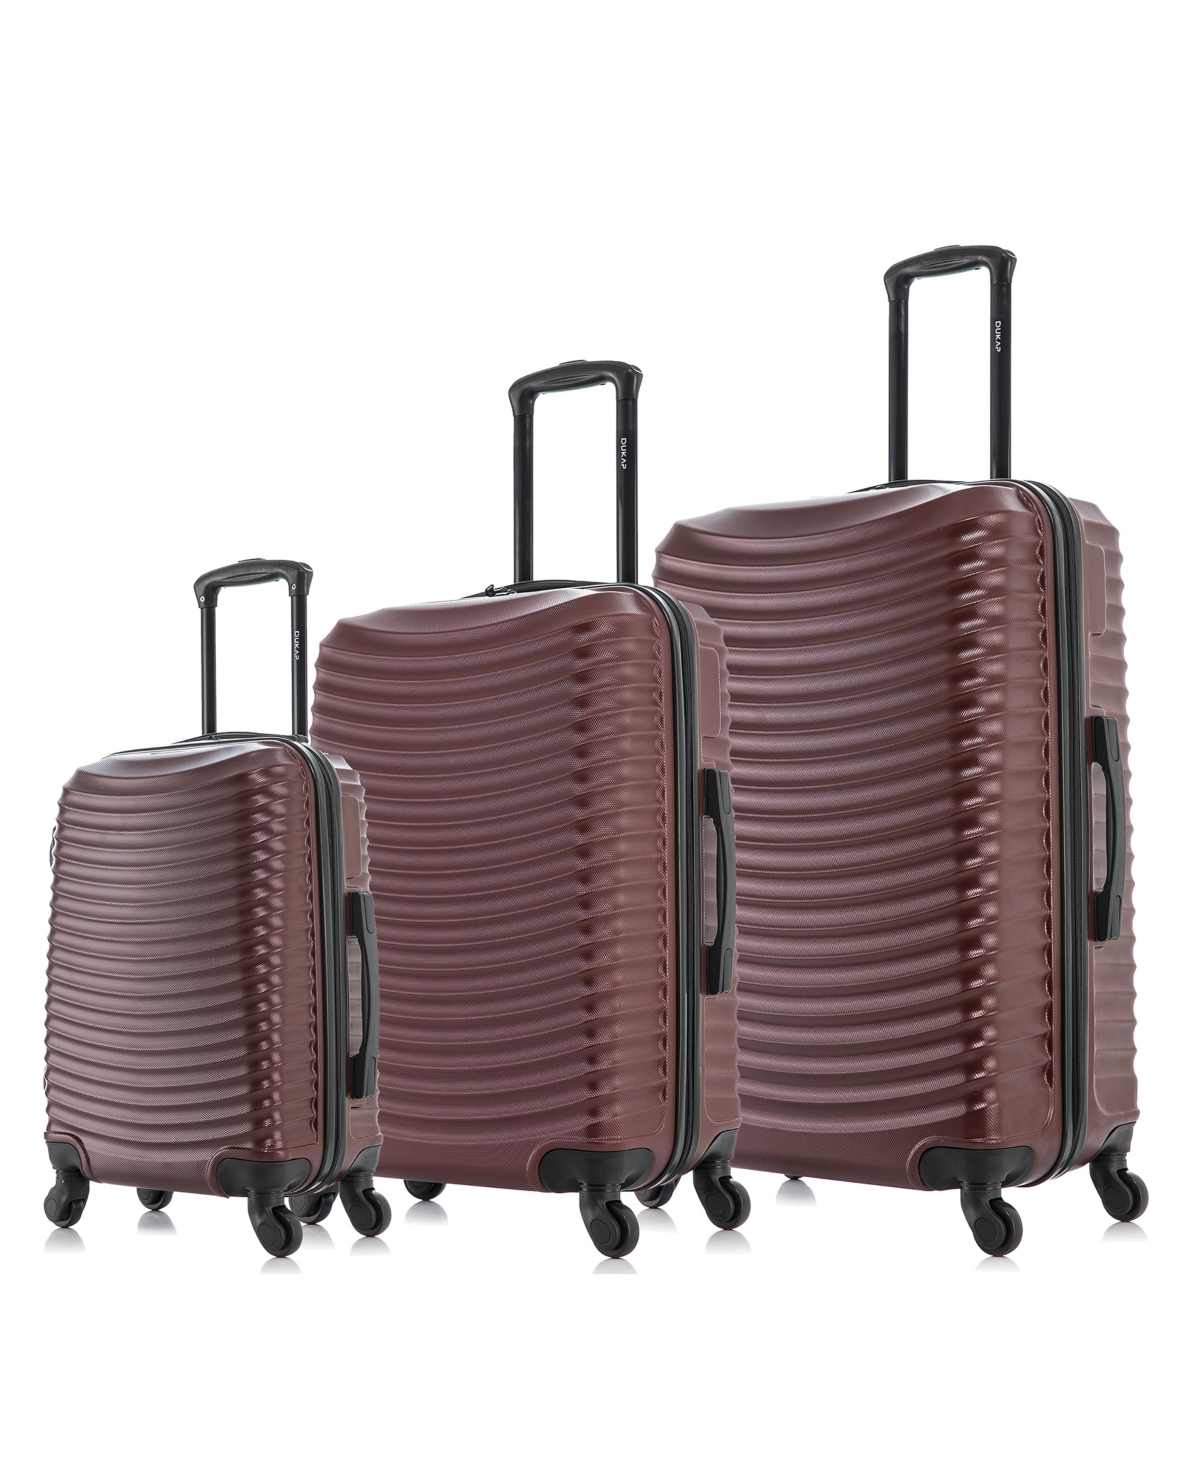 InUSA Adly Lightweight Hardside Spinner Luggage Set, 3 piece - Pastel Pur